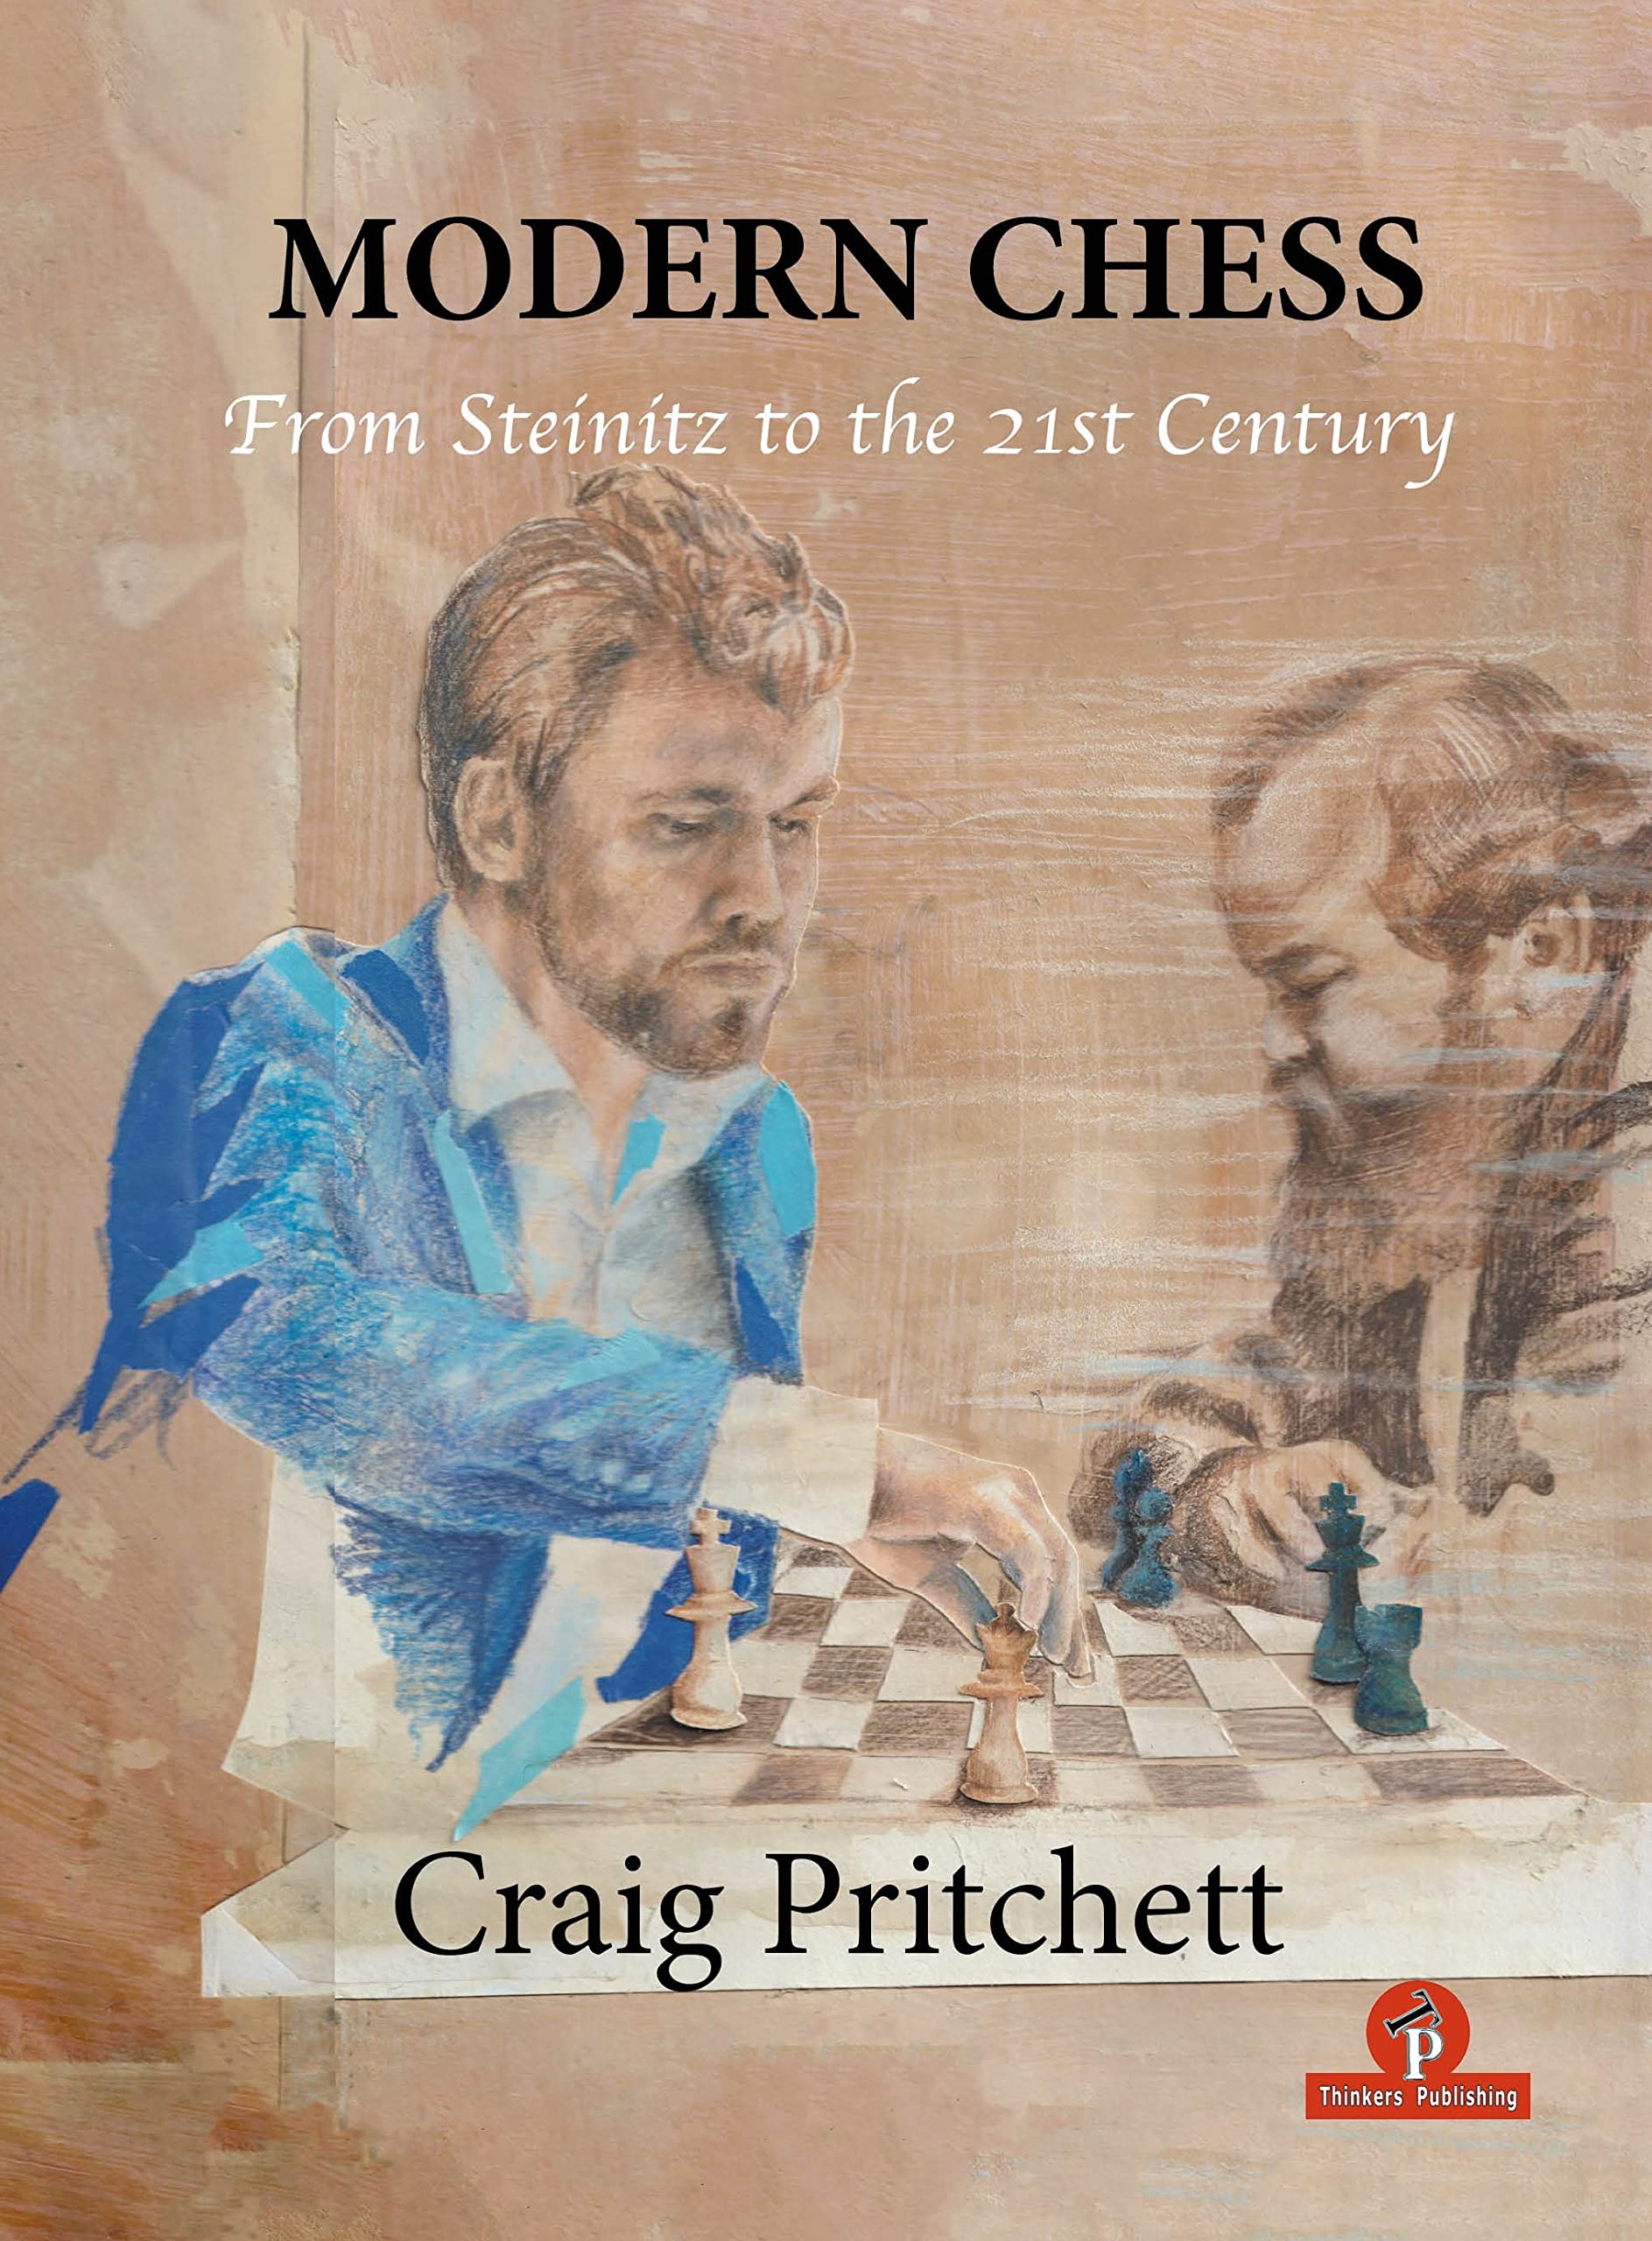 Modern Chess– From Steinitz to the 21st Century, Craig Pritchett, Thinker's Publishing, 15th February 2022, ISBN-10 ‏ : ‎ 9464201436